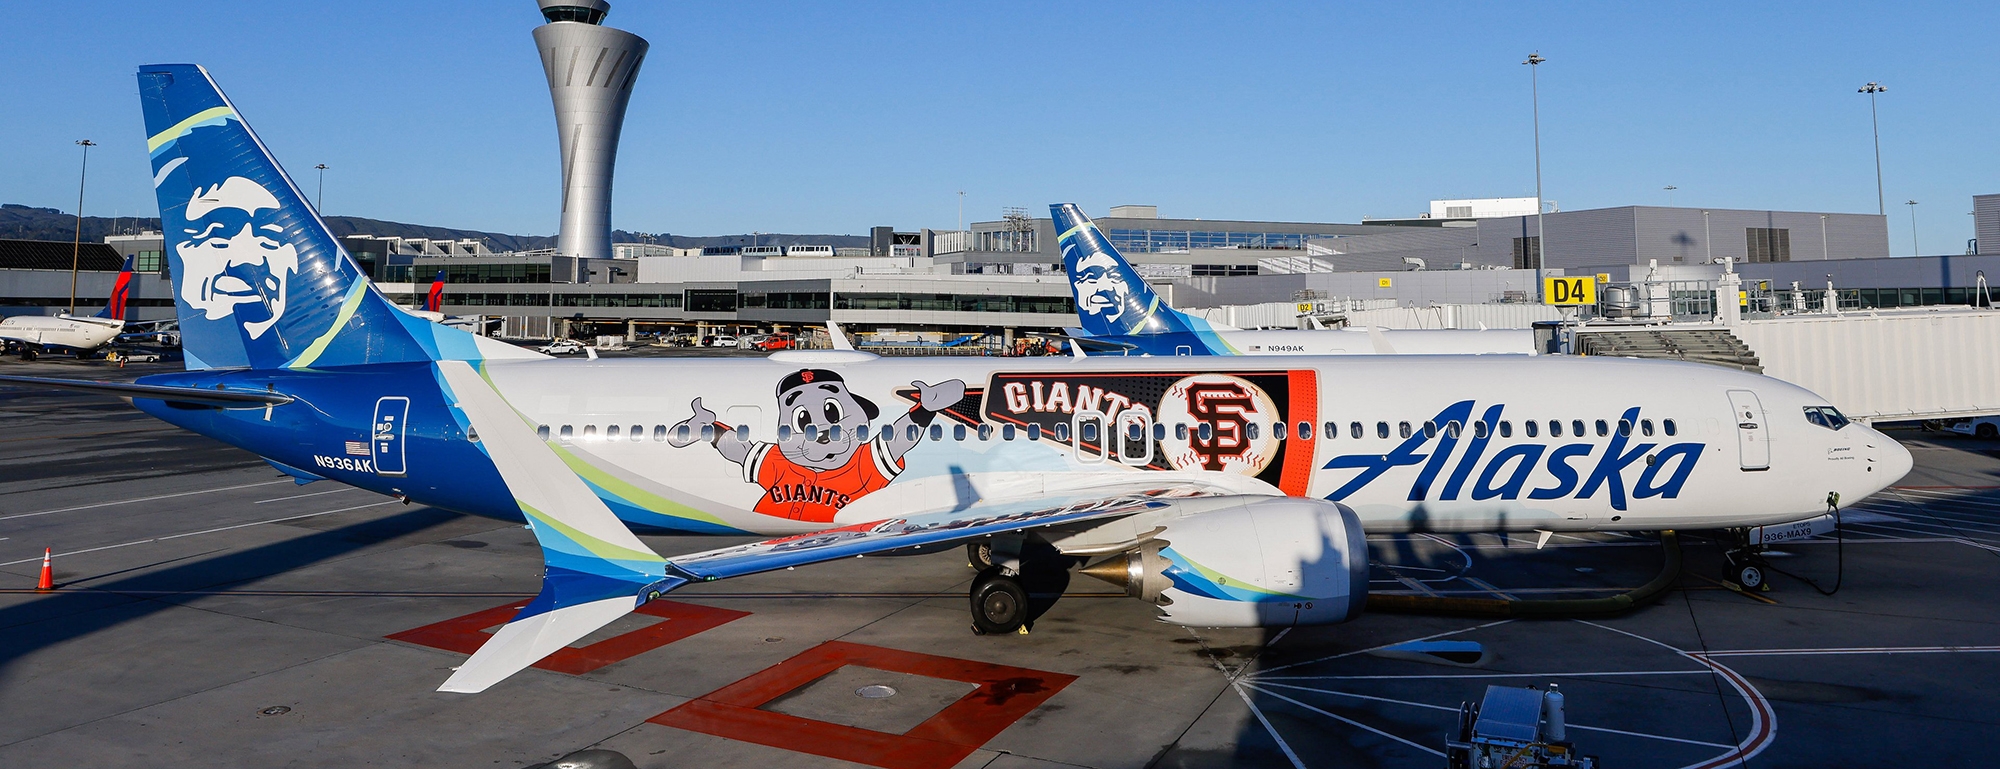 San Francisco Giants Livery aircraft